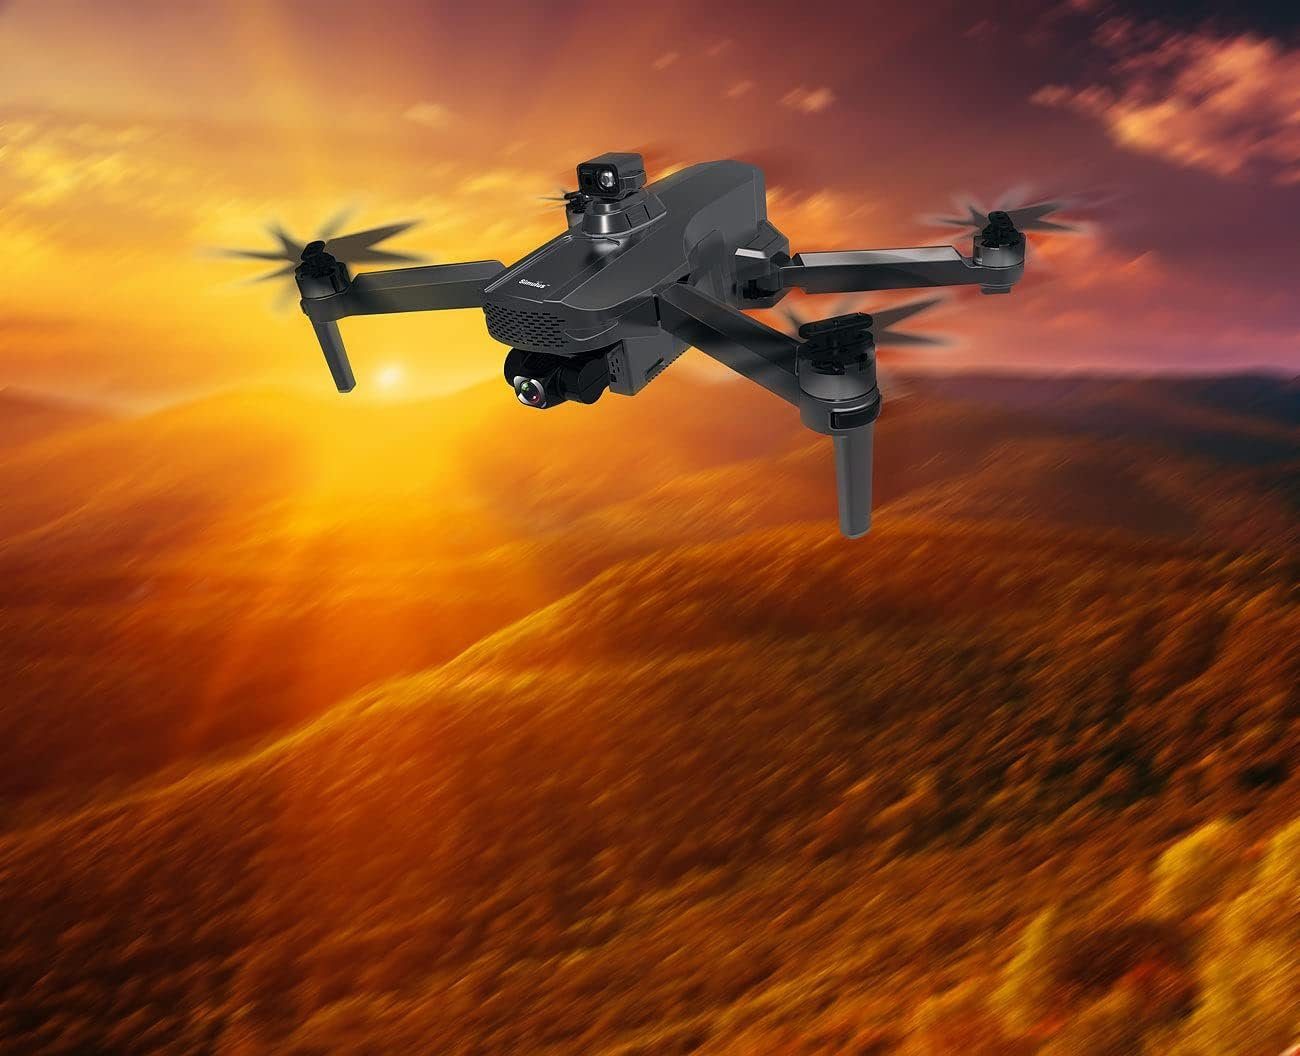 pixels, GPS-Drohne, Drone (3840 Brushless-Motor) 2160 -Abstandssensor, Faltbare Drohne x 4K-Cam Simulus